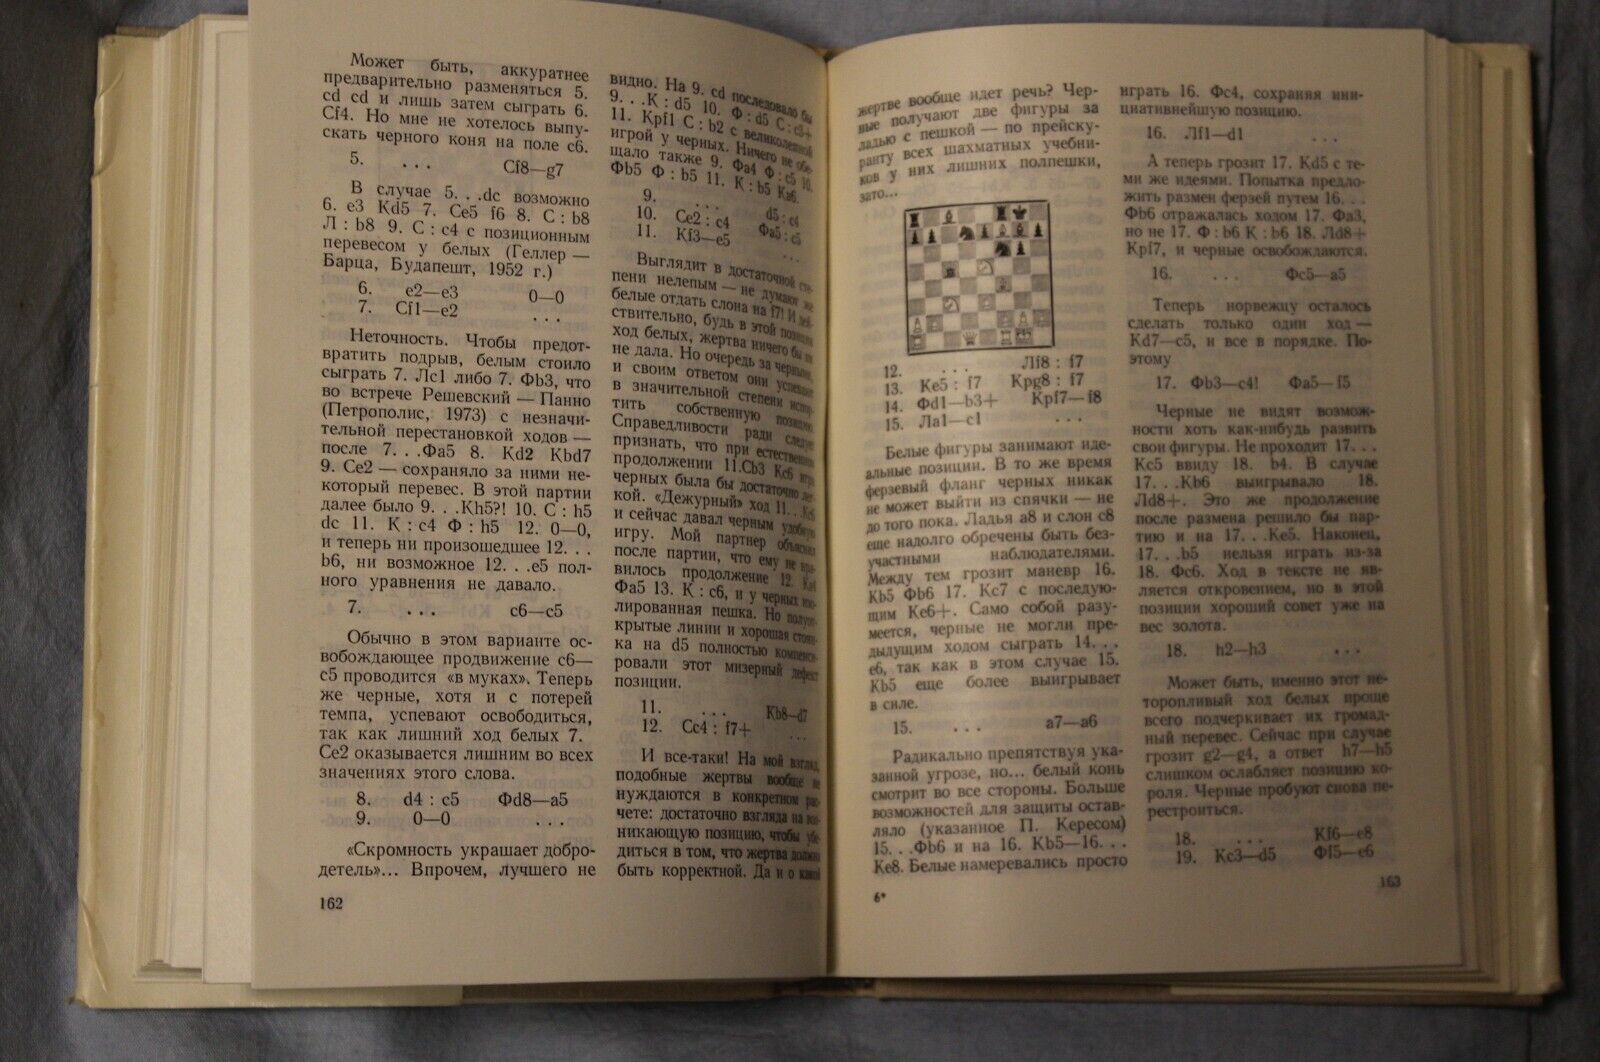 10961.Book signed by Damsky, exlibris Elpidinsky by Satonina : Into attack fire. 1978